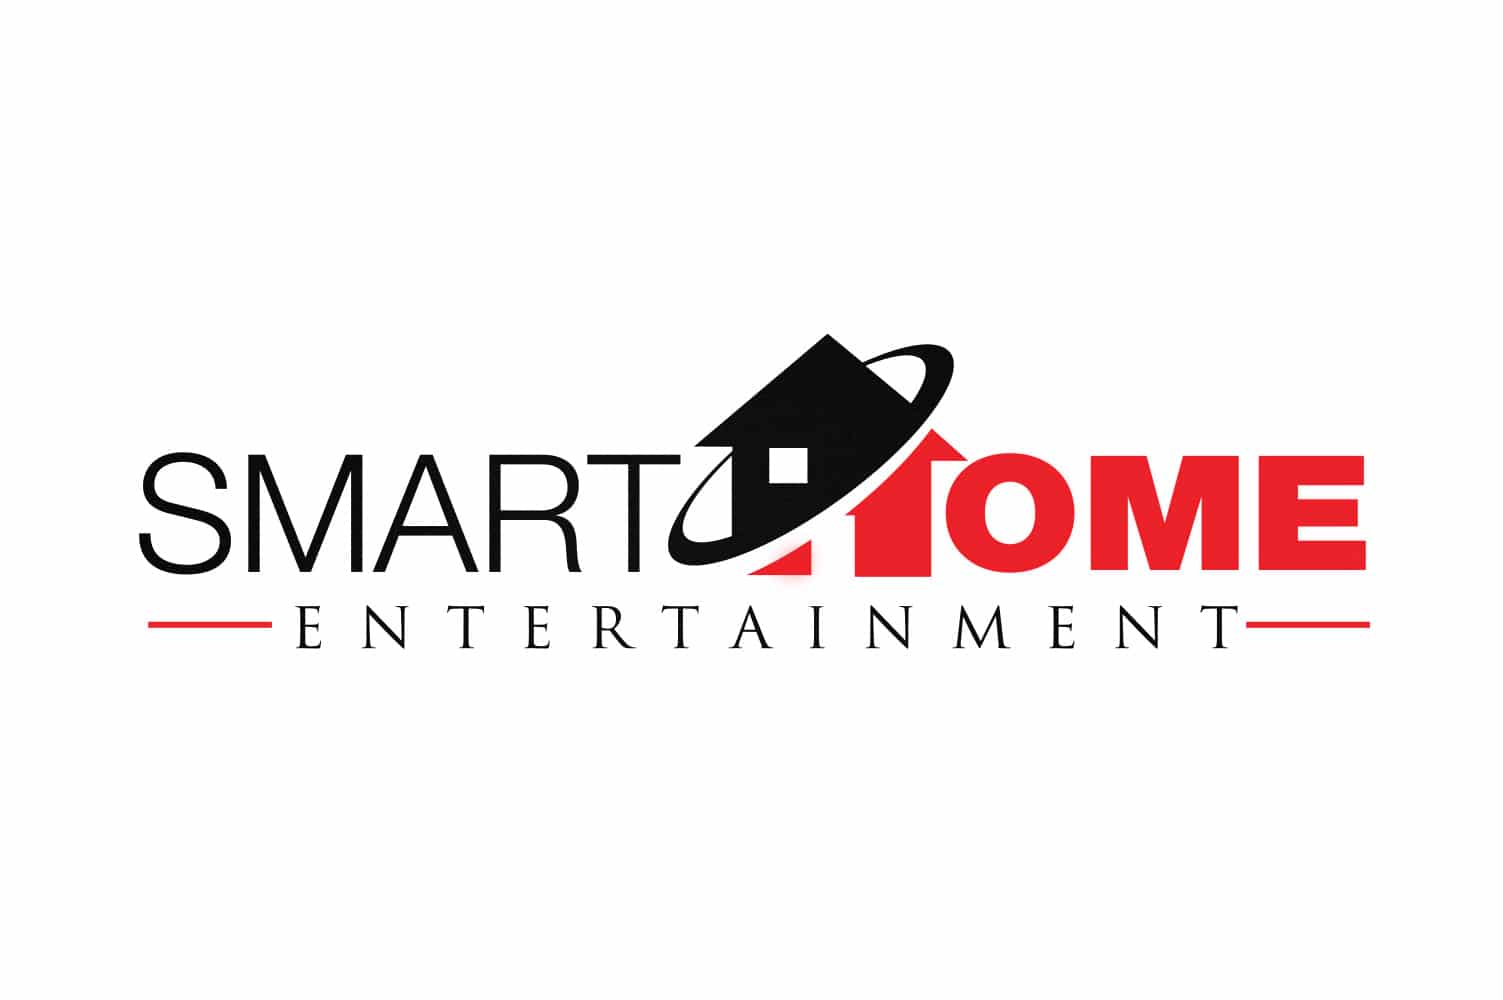 Home Entertainment Logo - Smart Home Entertainment Logo Design